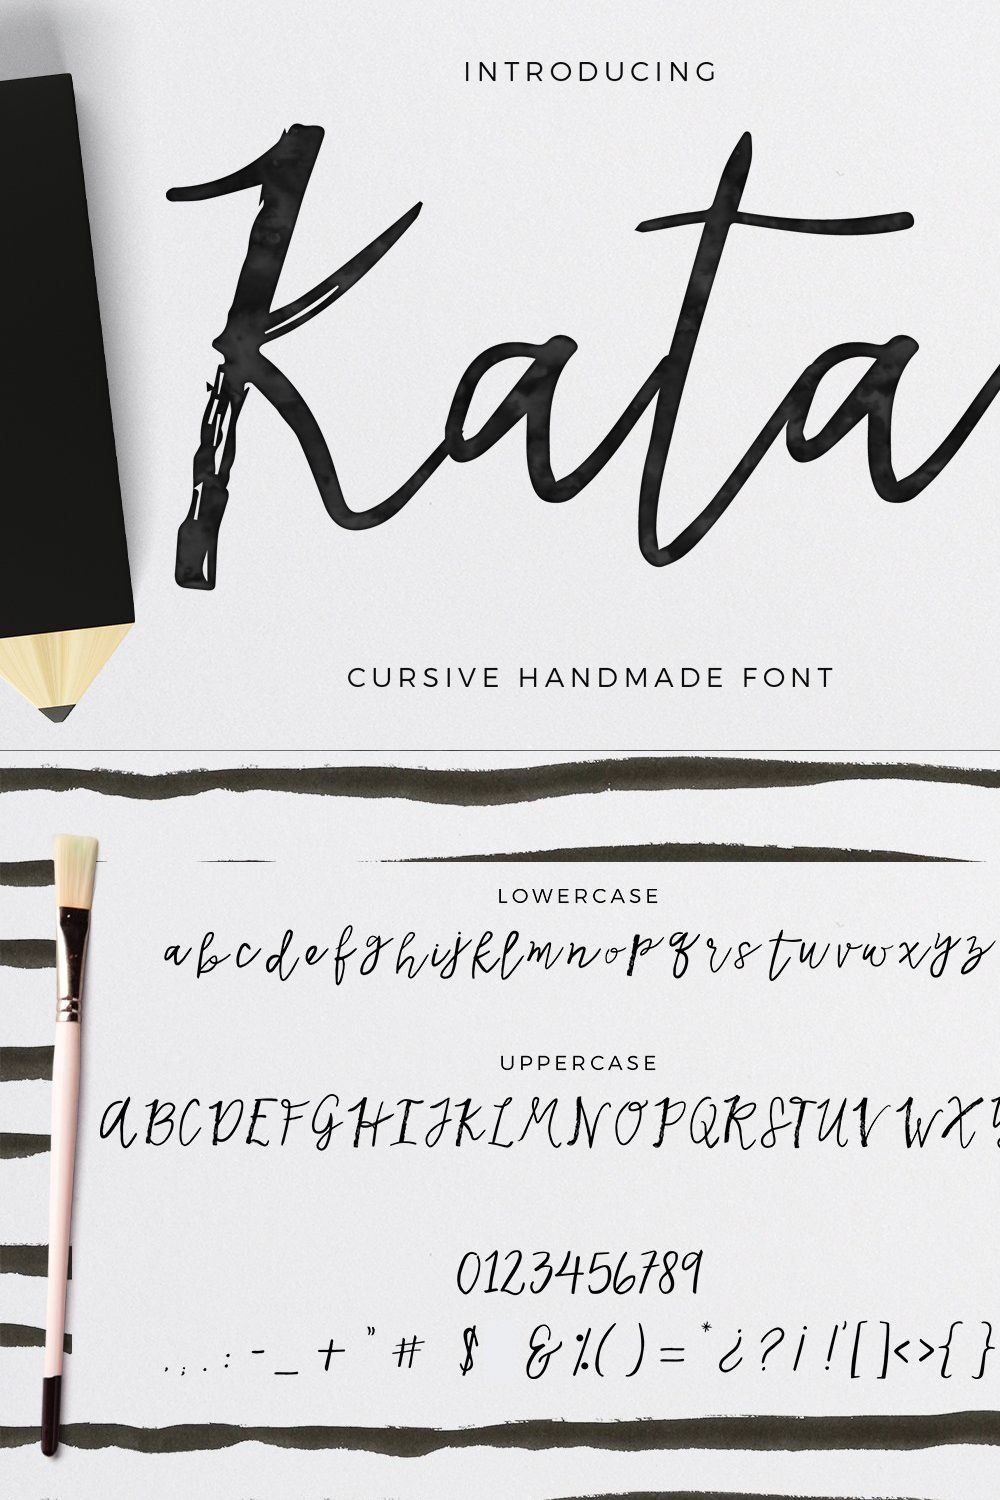 Kata!- cursive handmade font pinterest preview image.